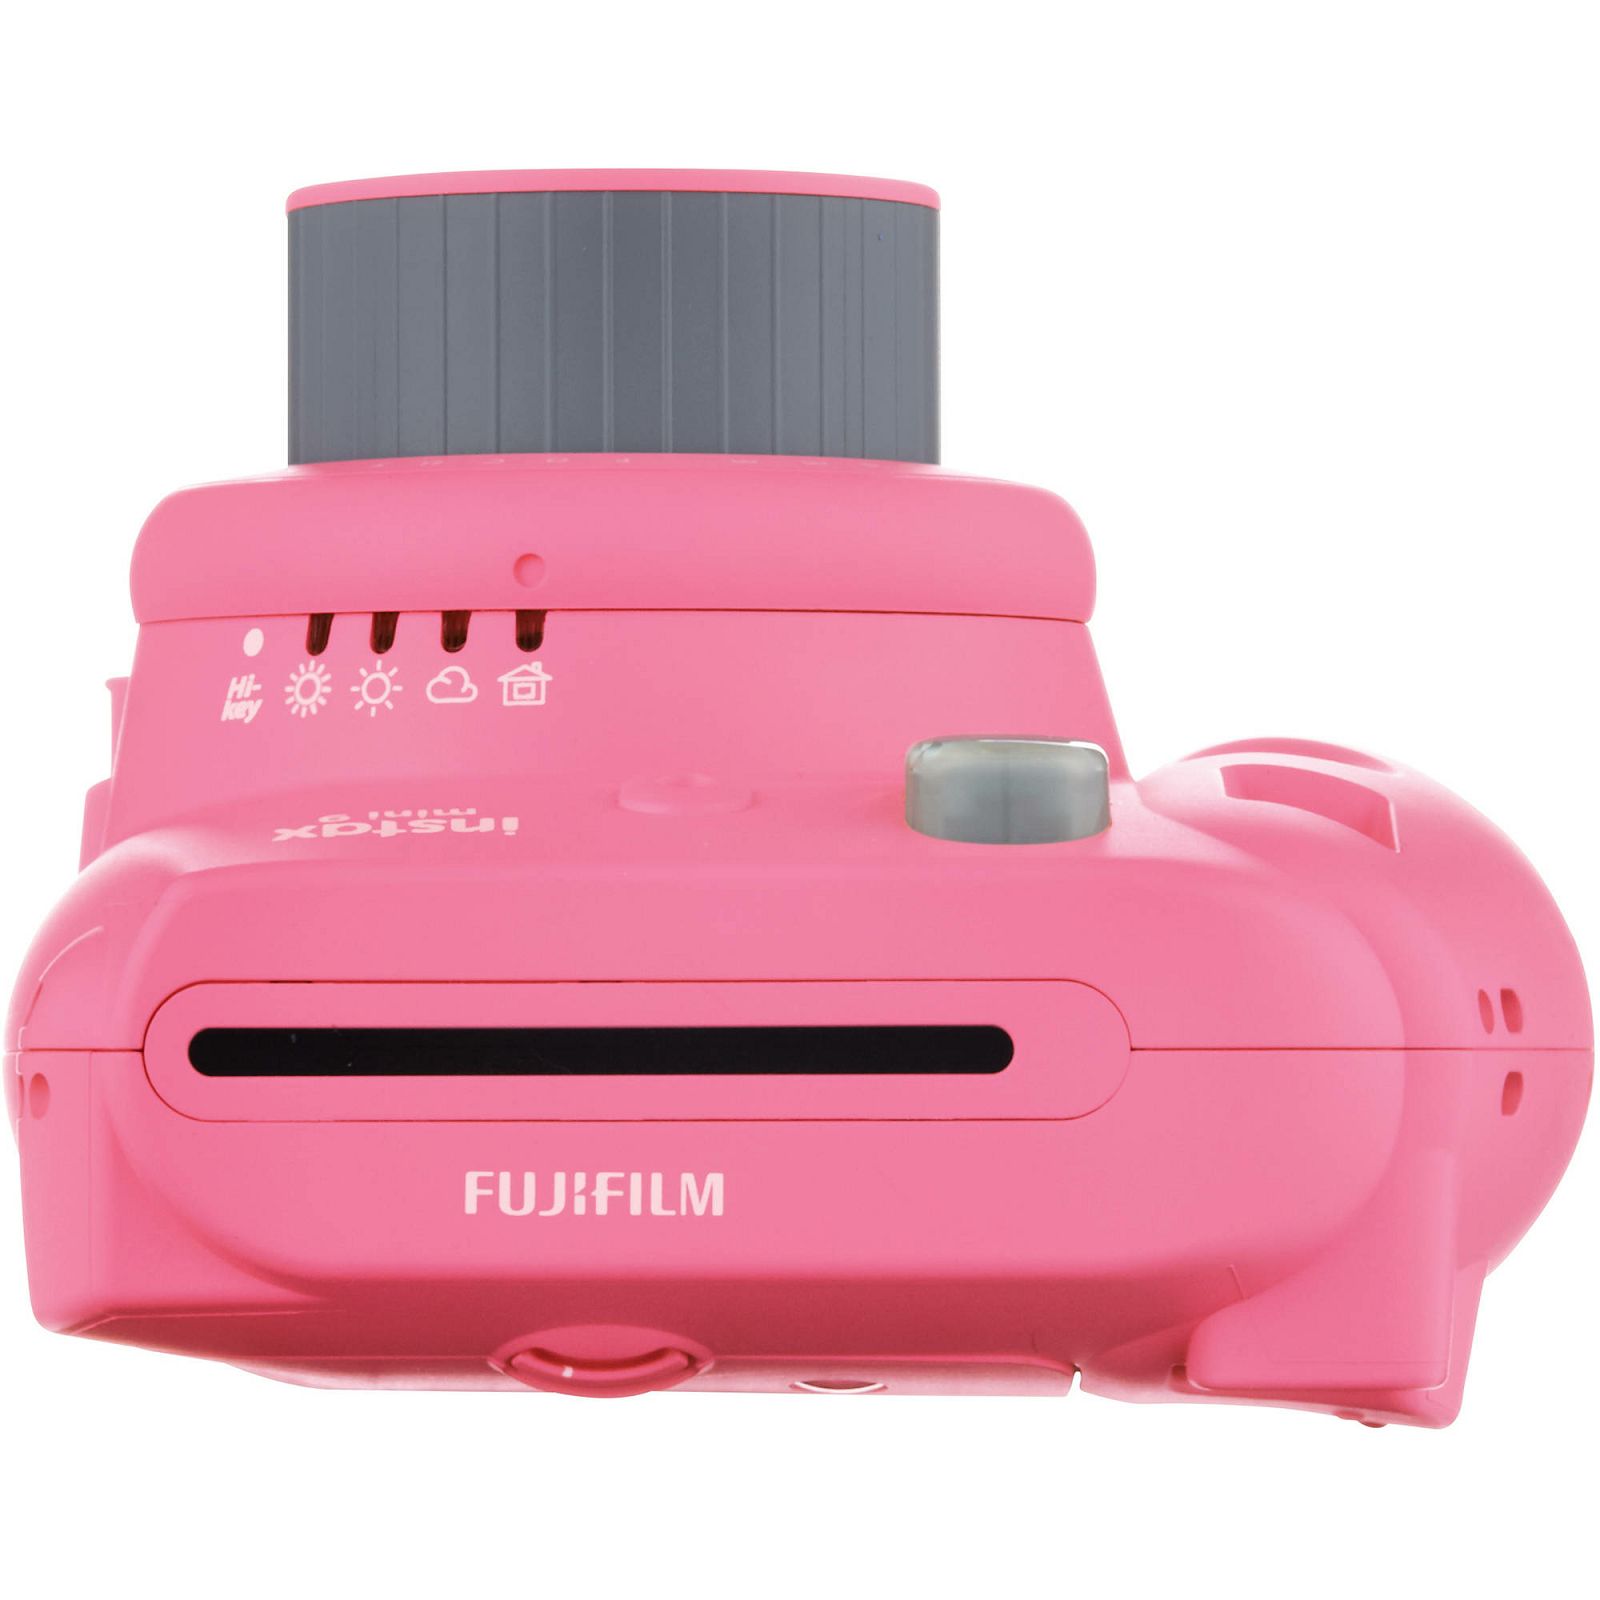 Fujifilm Instax Mini 9 Flamingo Pink rozi polaroid Fuji fotoaparat s trenutnim ispisom fotografije + Fujinon 60mm f/12.7 objektiv